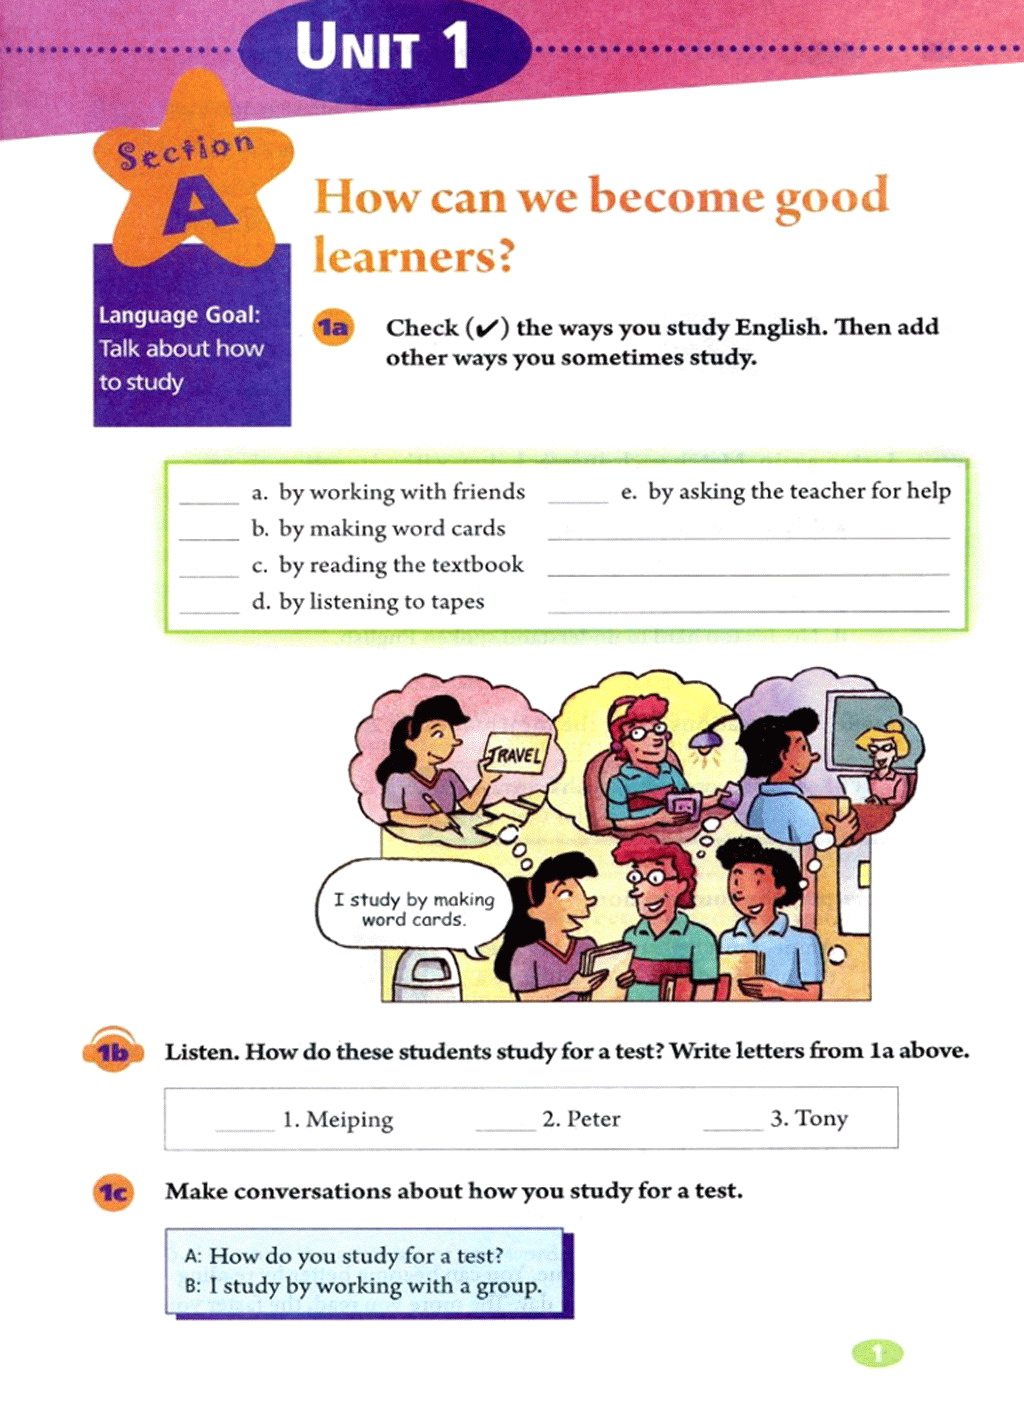 部编版九年级英语全册Unit 1 How can we become good learners?第0页